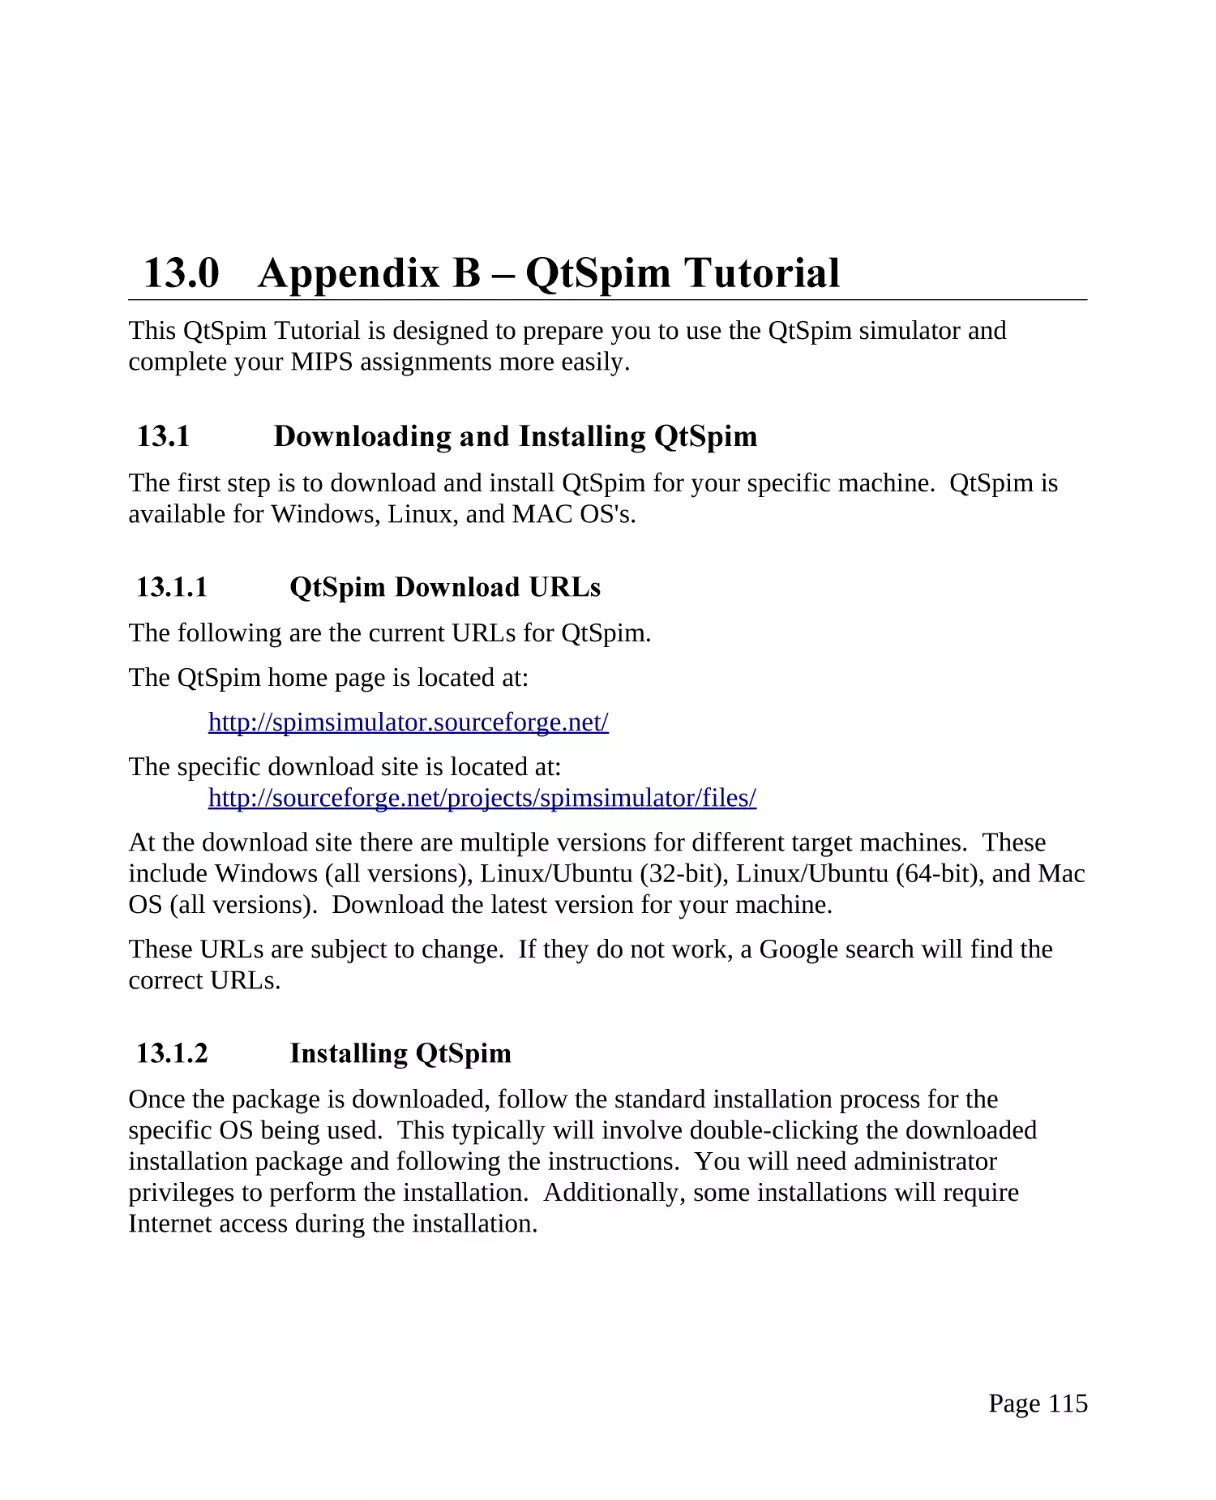 13.0 Appendix B – QtSpim Tutorial
13.1 Downloading and Installing QtSpim
13.1.1 QtSpim Download URLs
13.1.2 Installing QtSpim